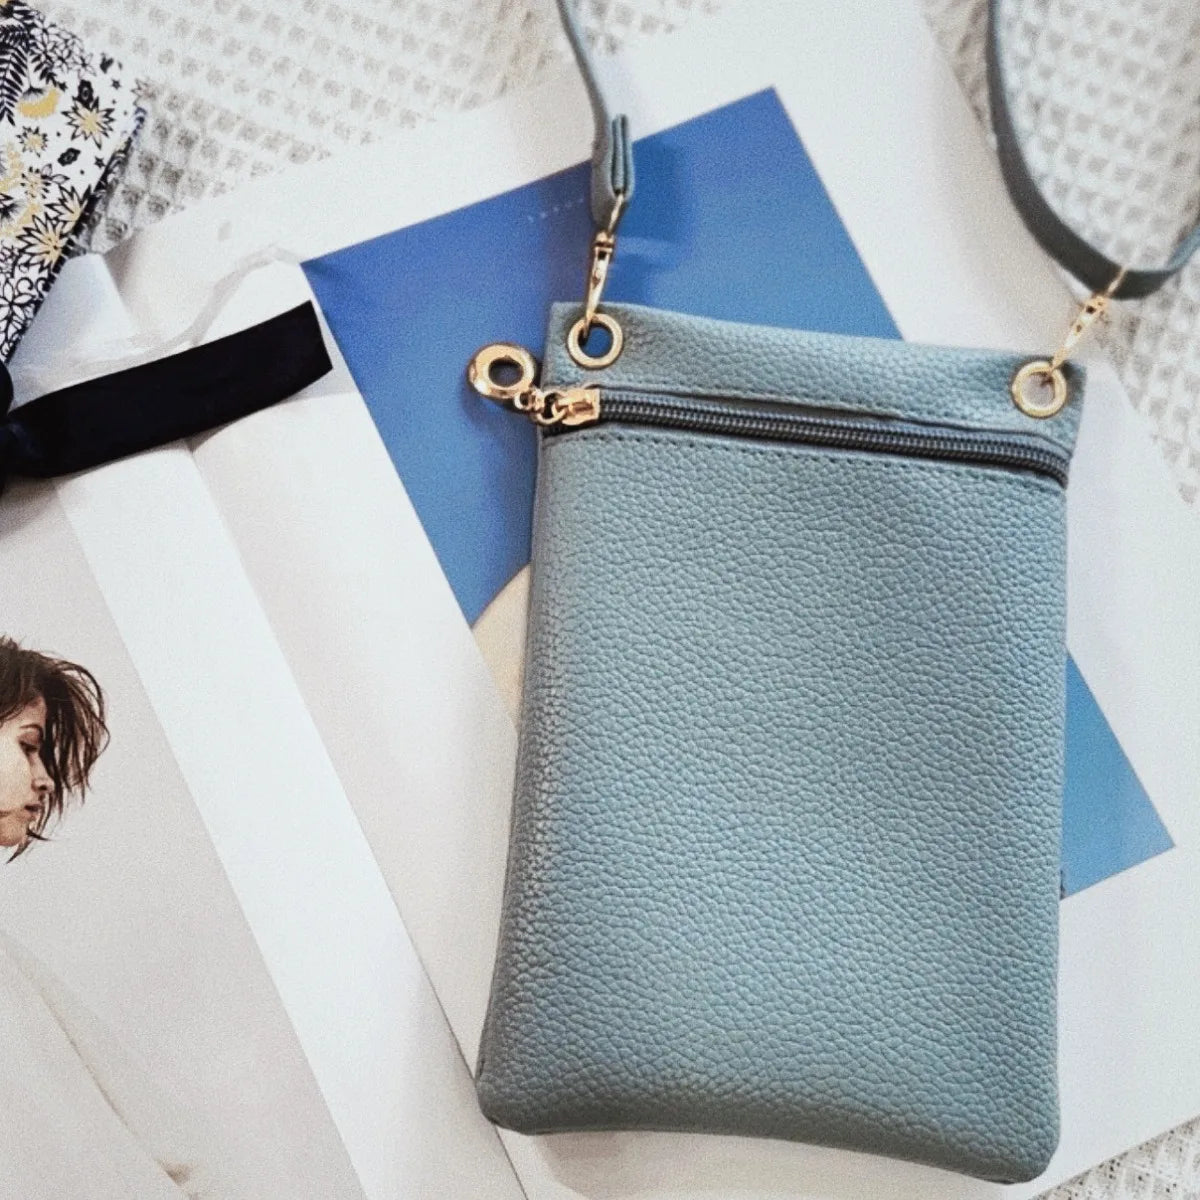 Mini Crossbody Bag PU Litchi Pattern Personalized Fashion Phone Bag Sweet Women's Convenient Shoulder Bag Purses and Handbags